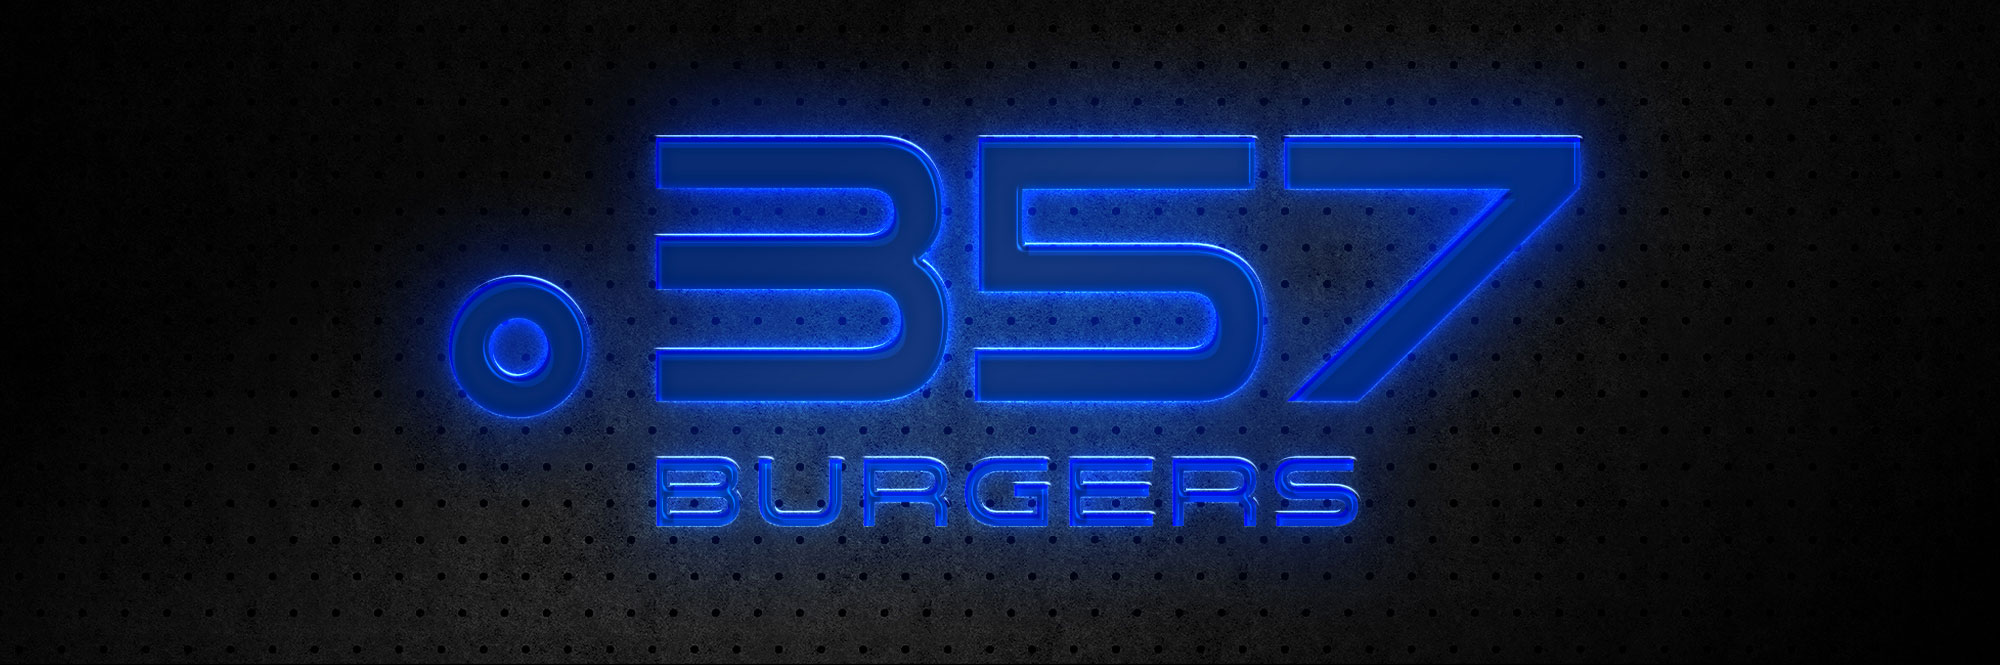 .357 Burgers